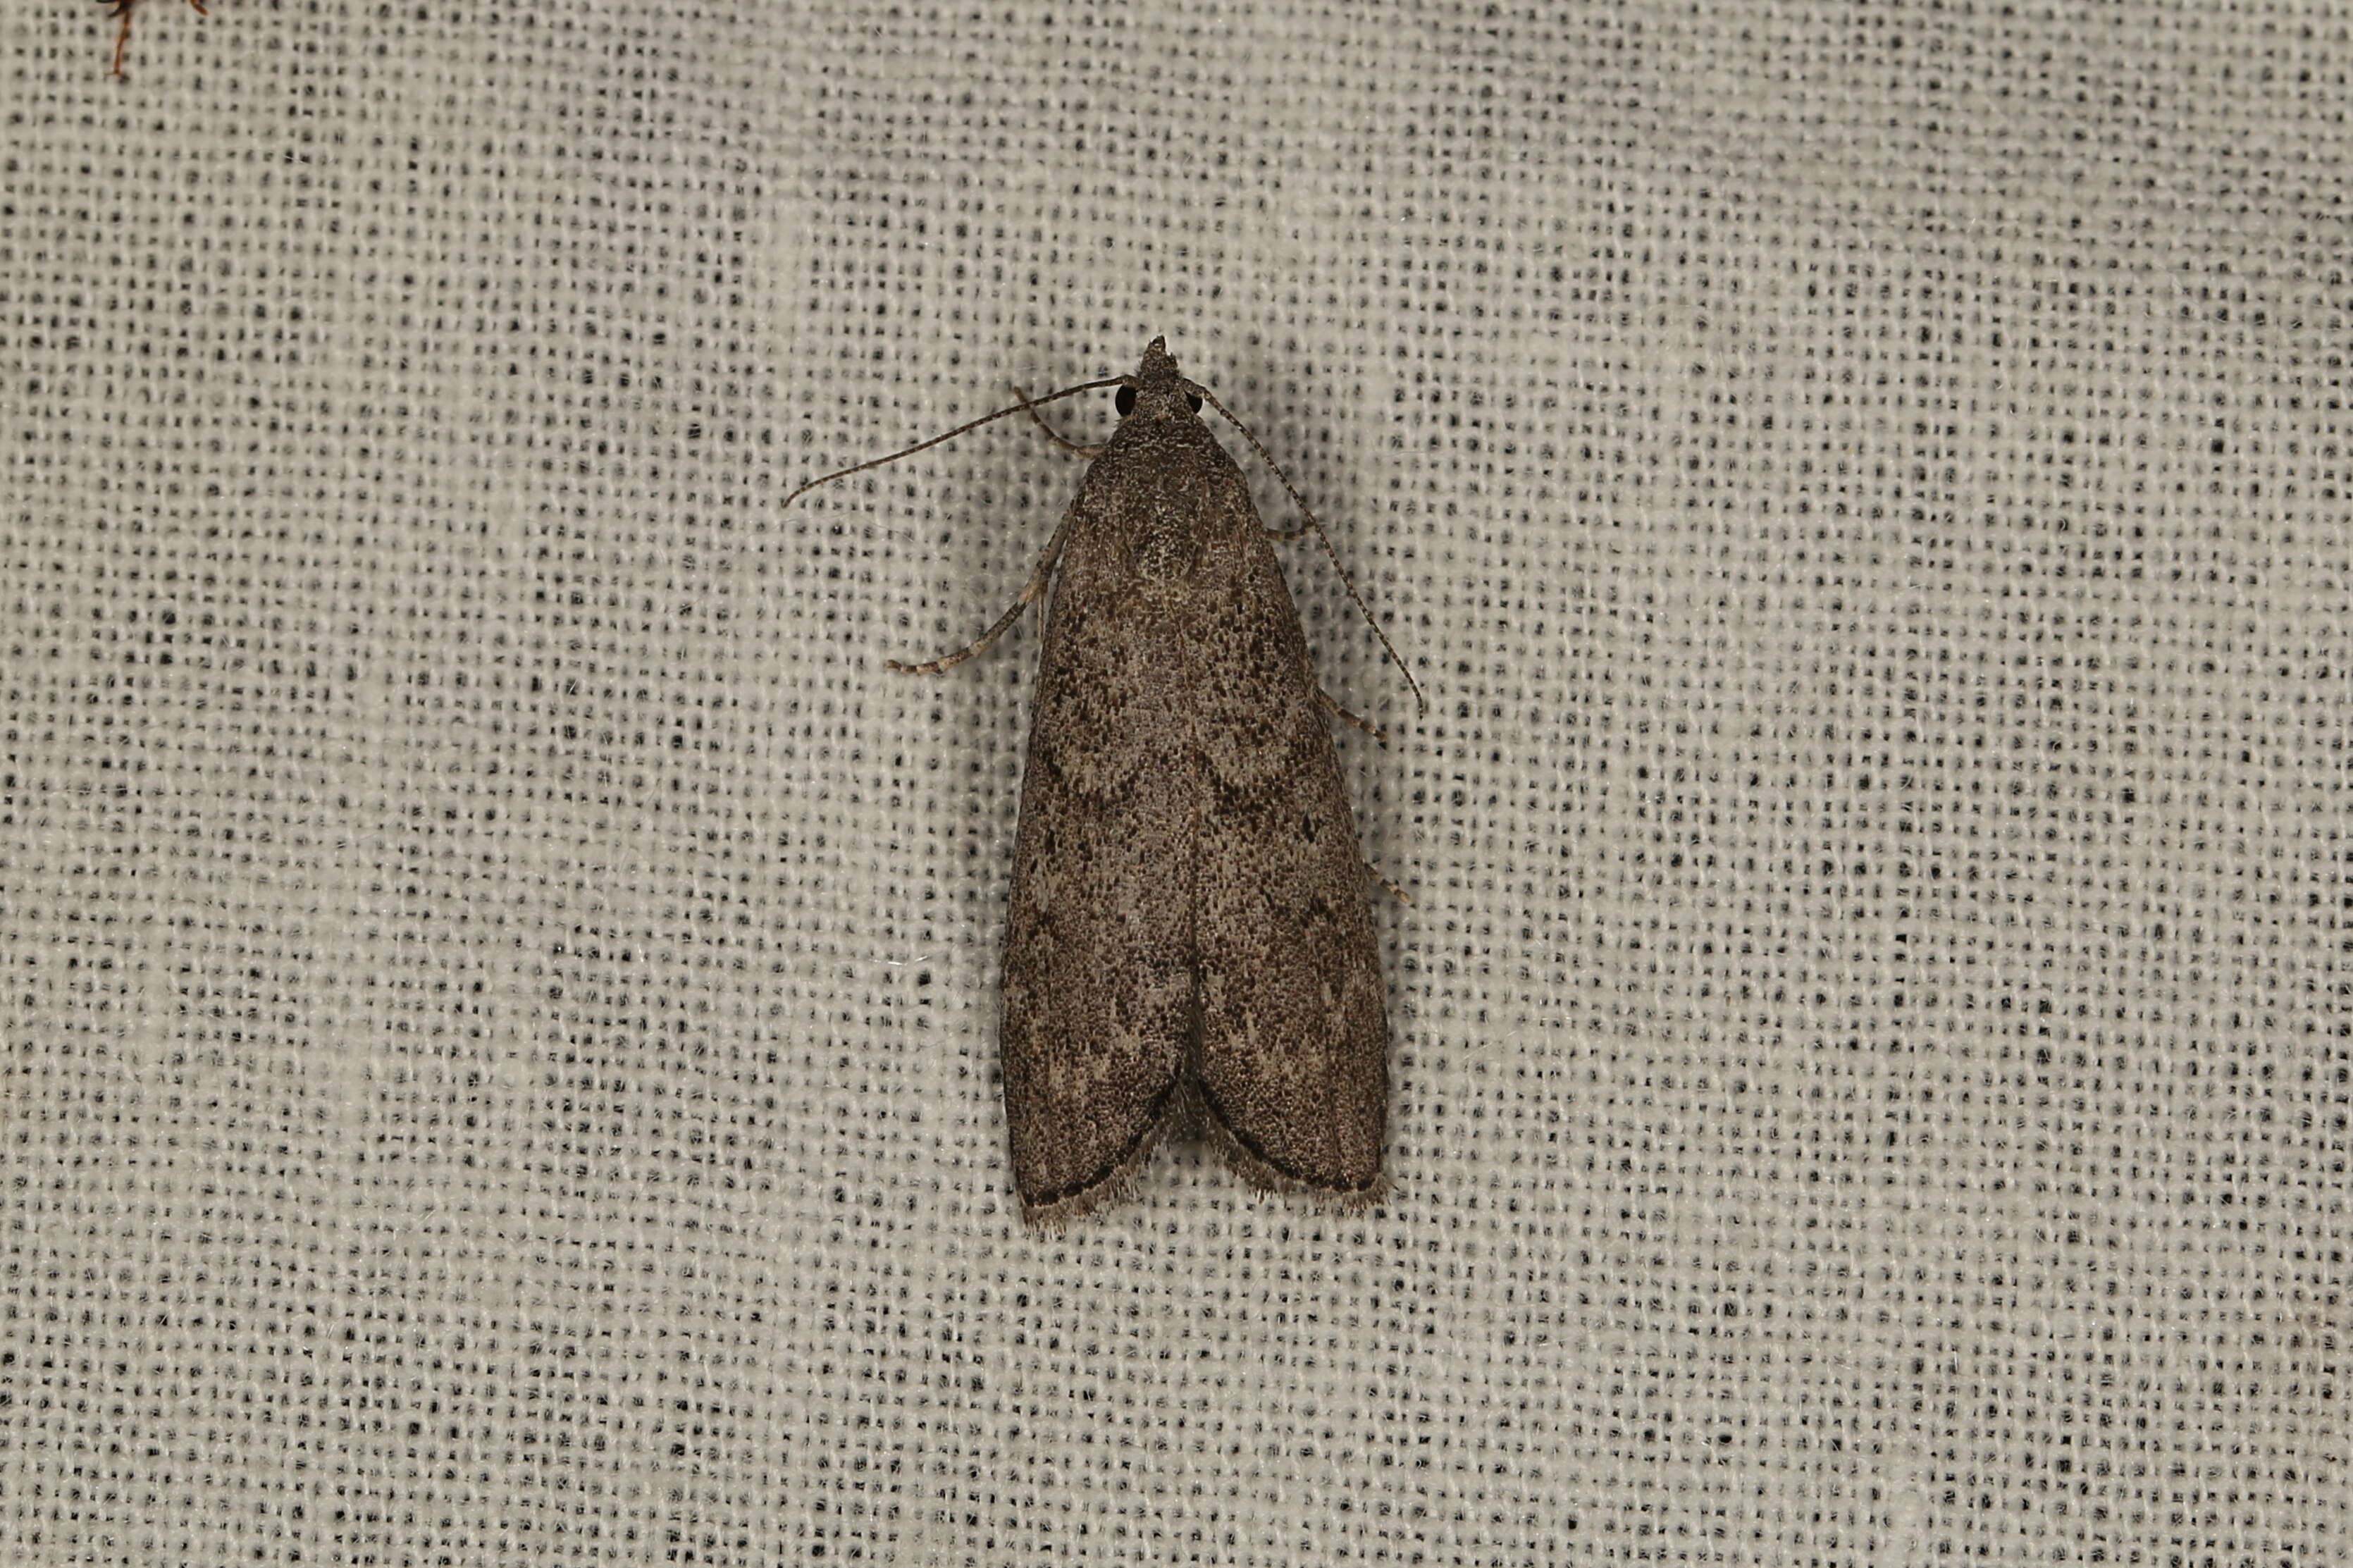 Image of Heteromicta pachytera Meyrick 1880